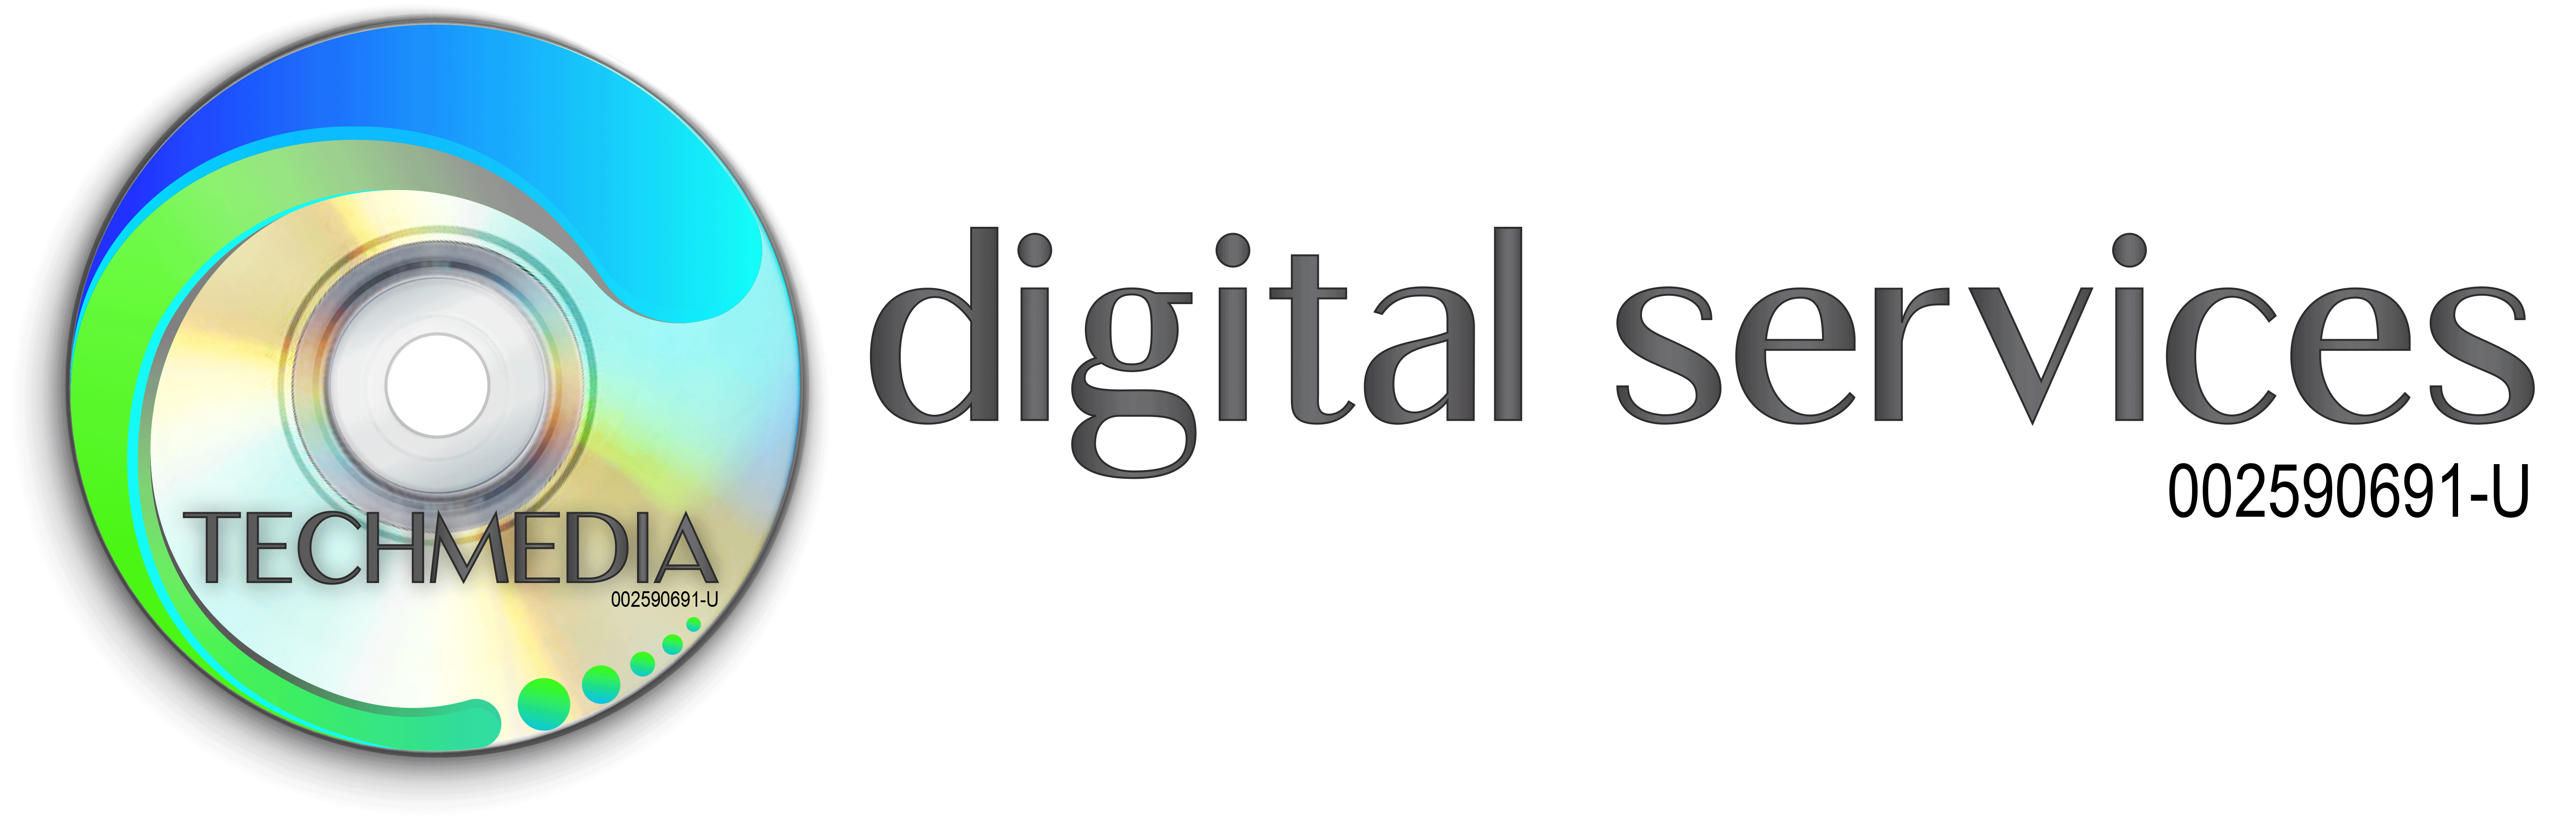 Techmedia Digital Services Malaysia